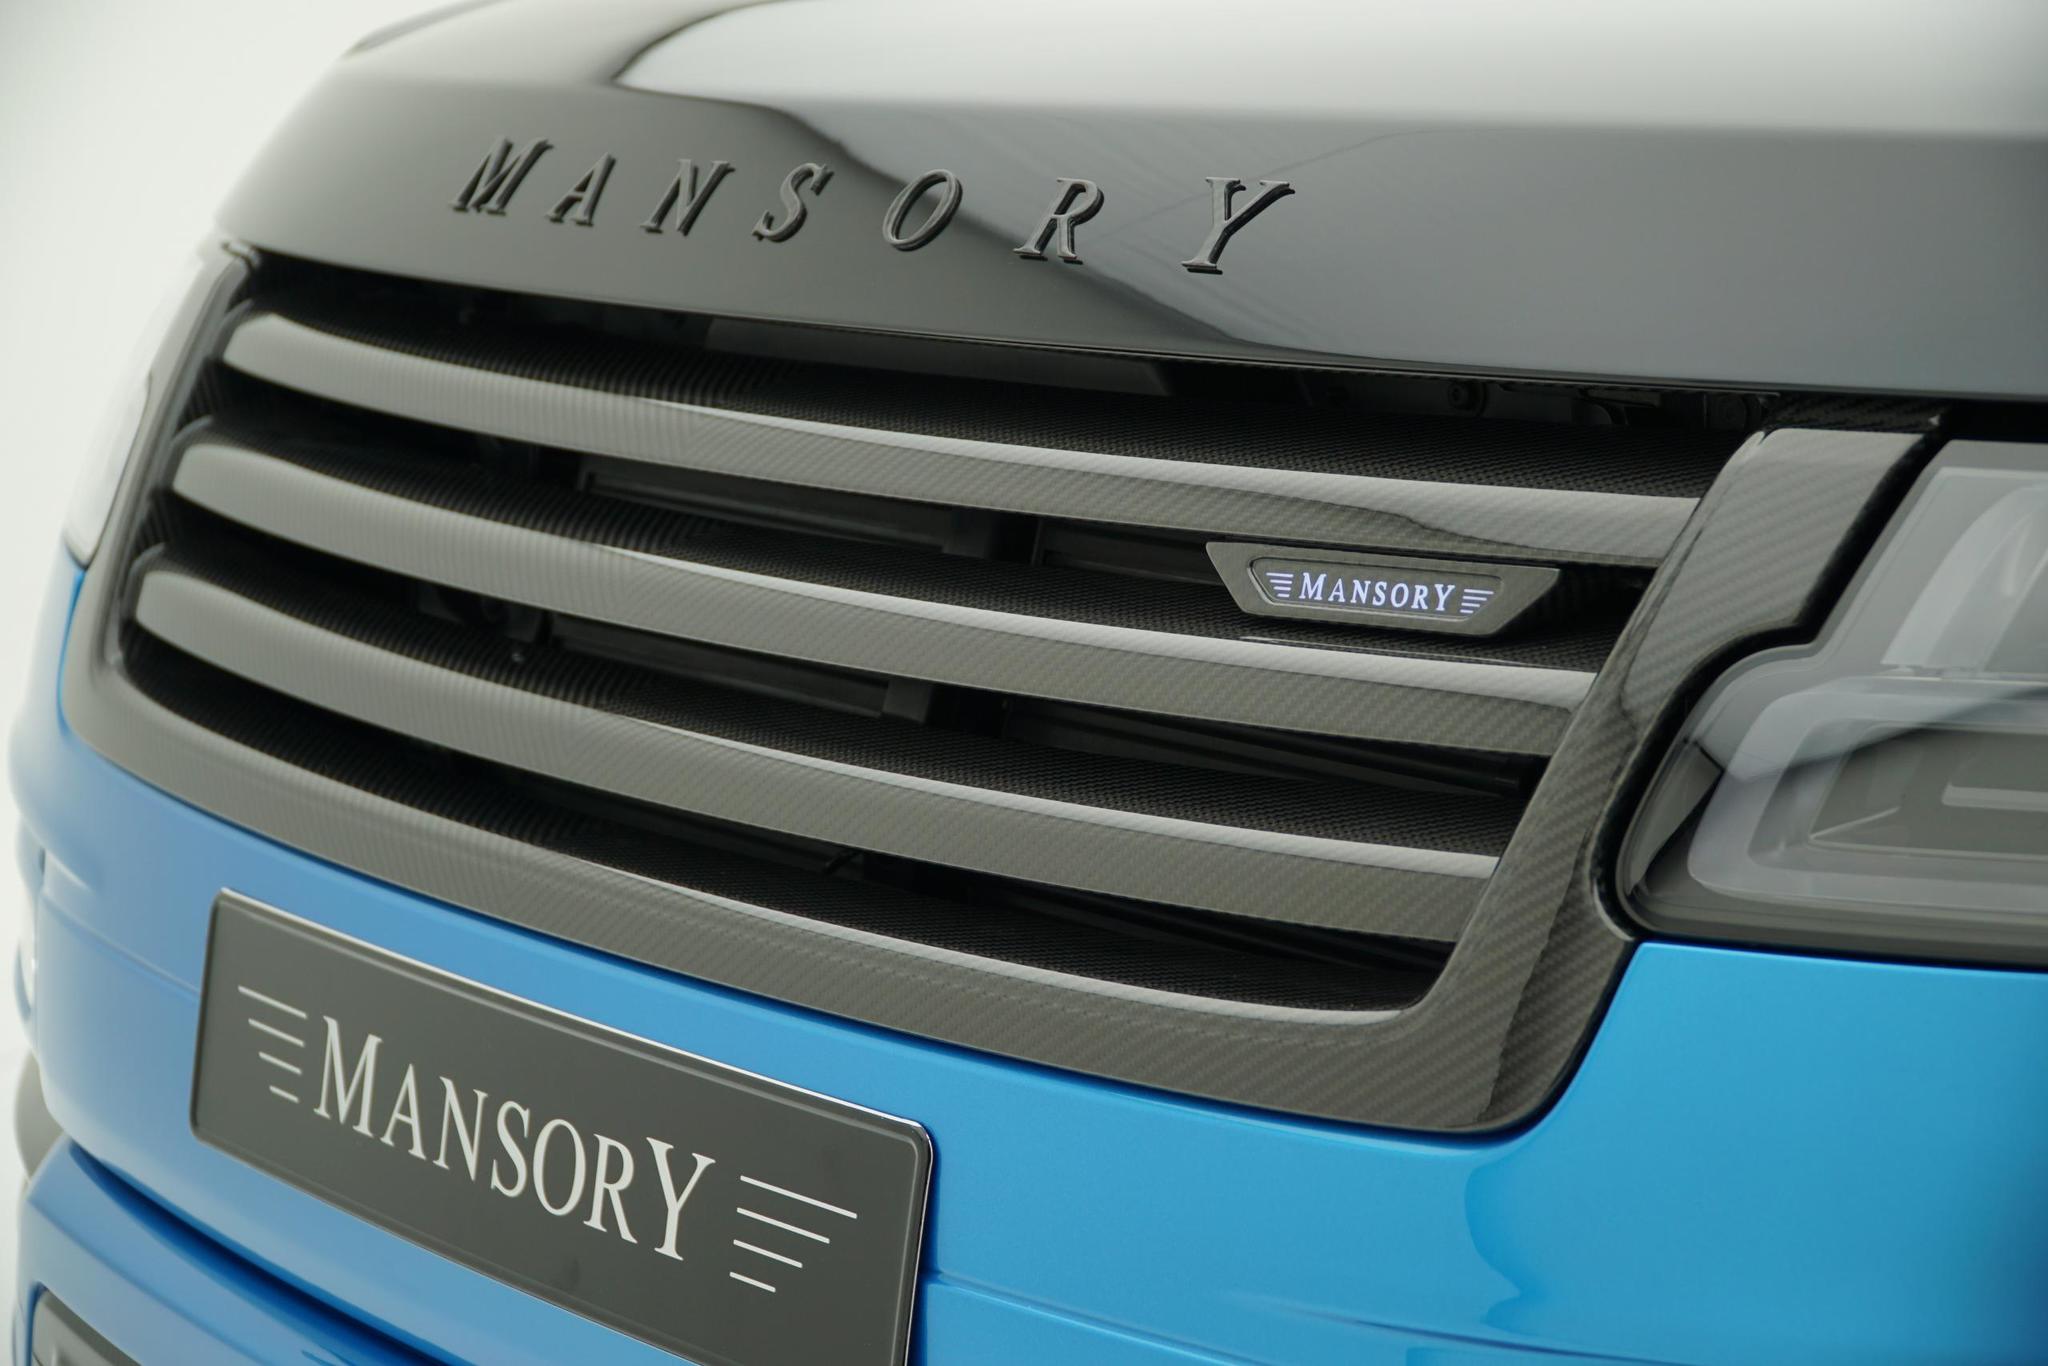 Mansory body kit for Range Rover new style